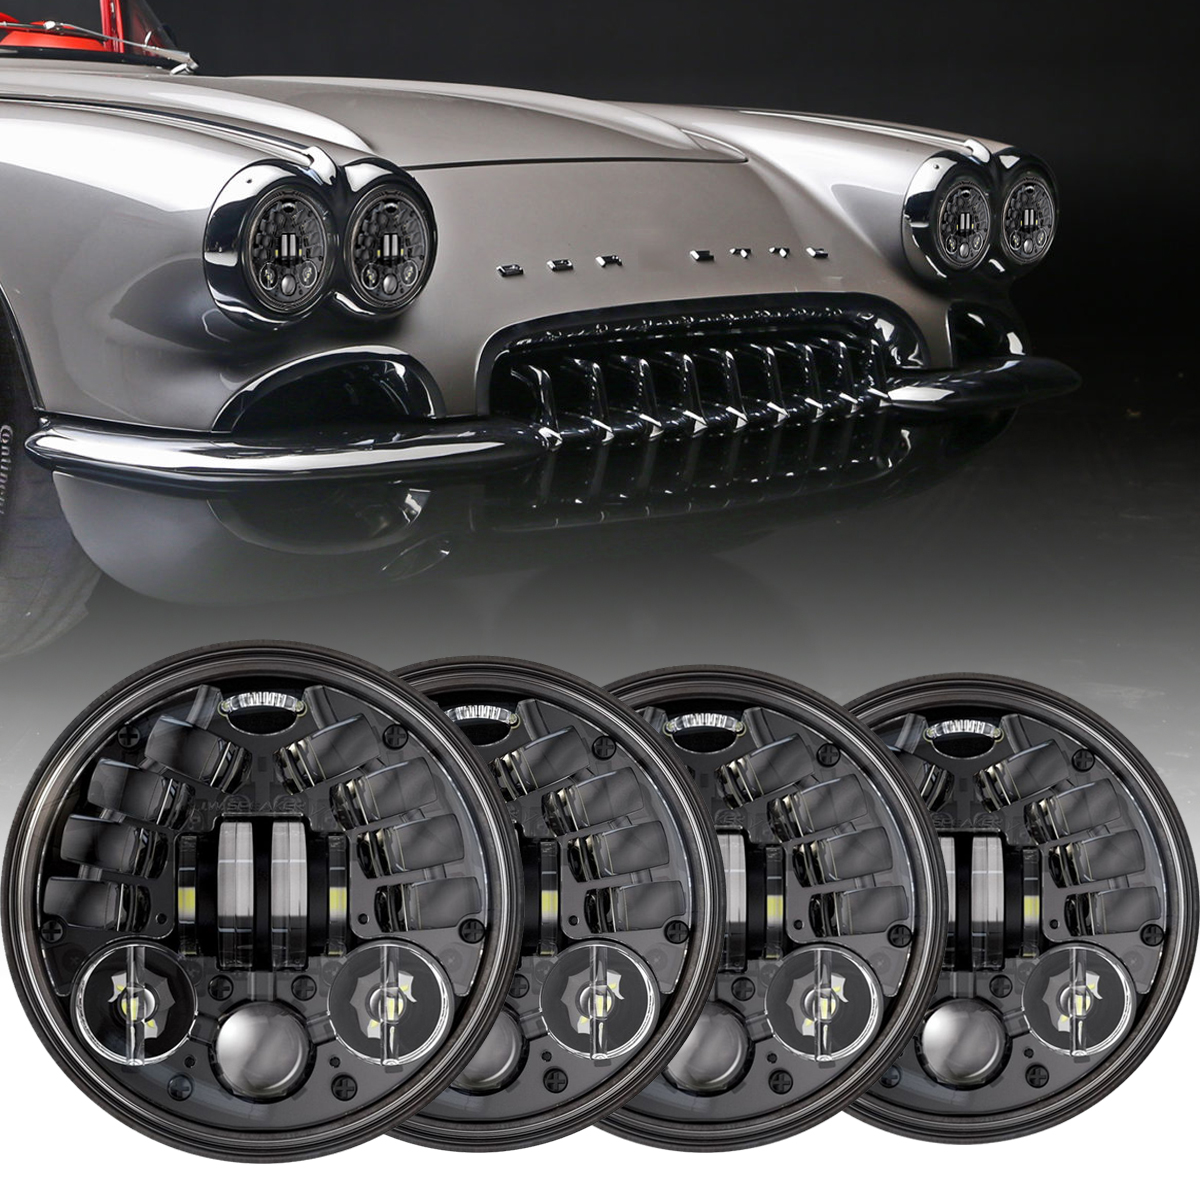 4pcs DOT Black 5-3/4" 5.75 Round LED Headlight Hi-Lo Fit Chevy Corvair 1960-1969